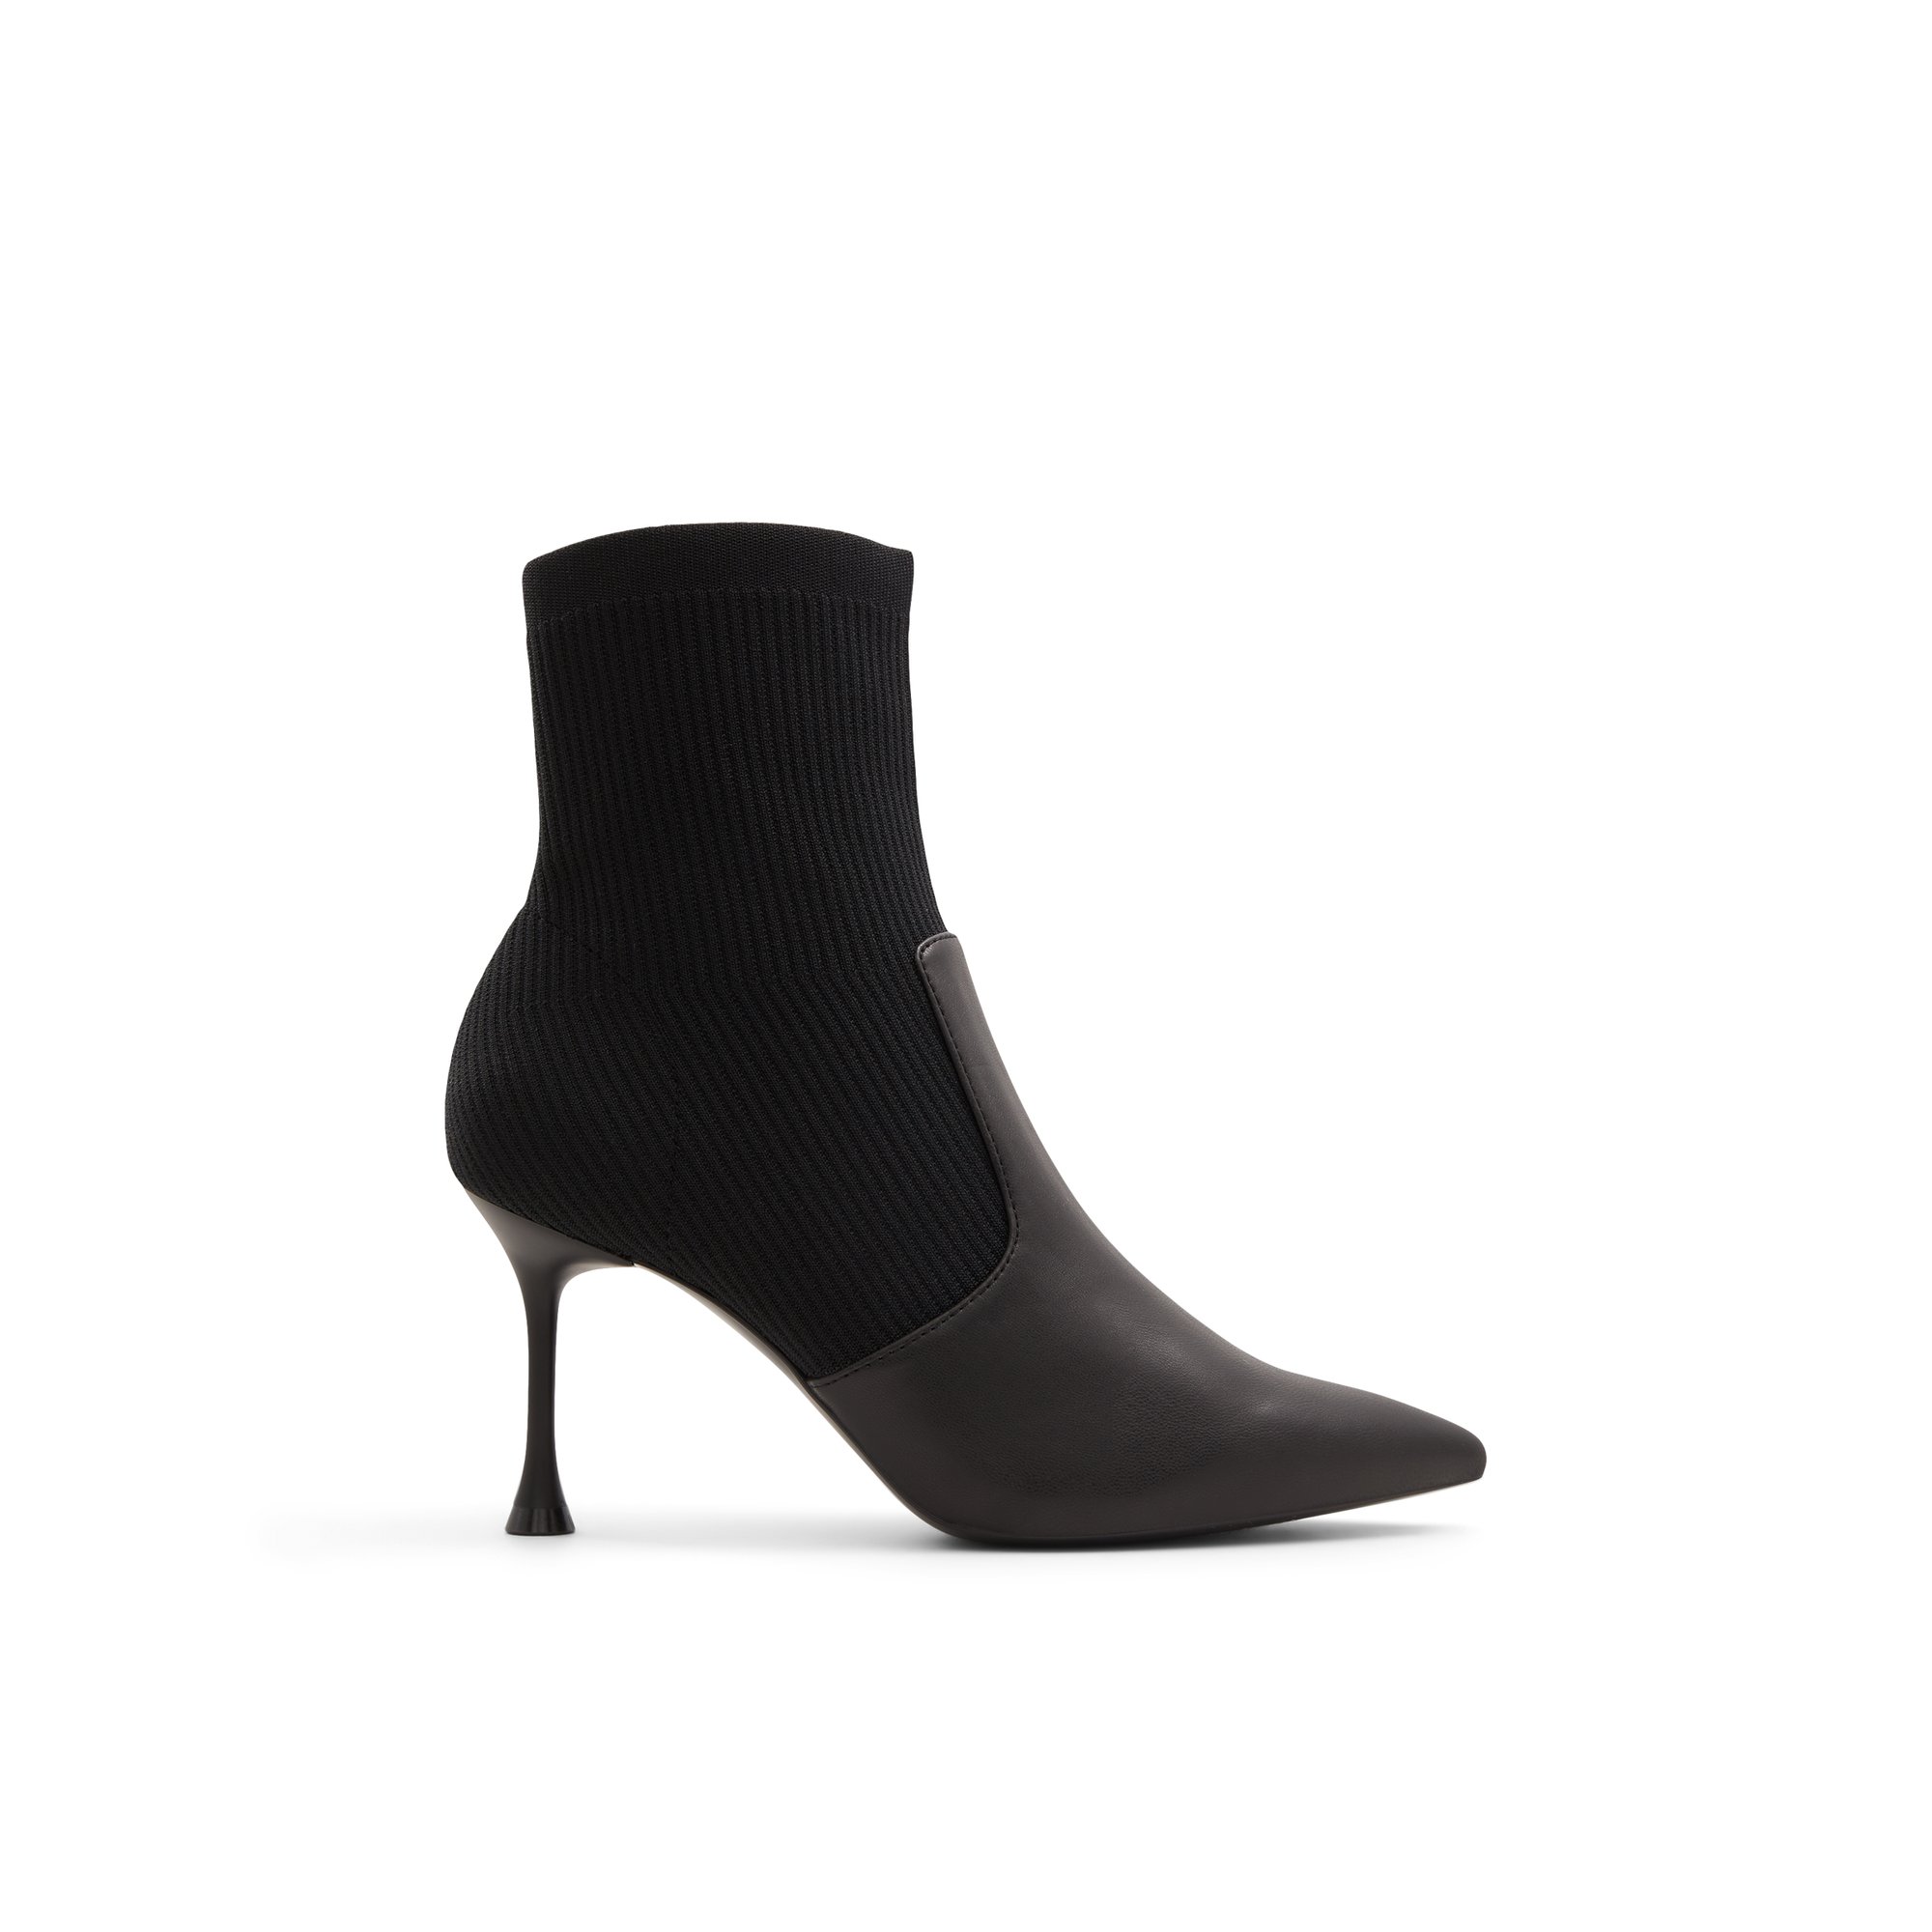 ALDO Gabi - Women's Boots Dress - Black